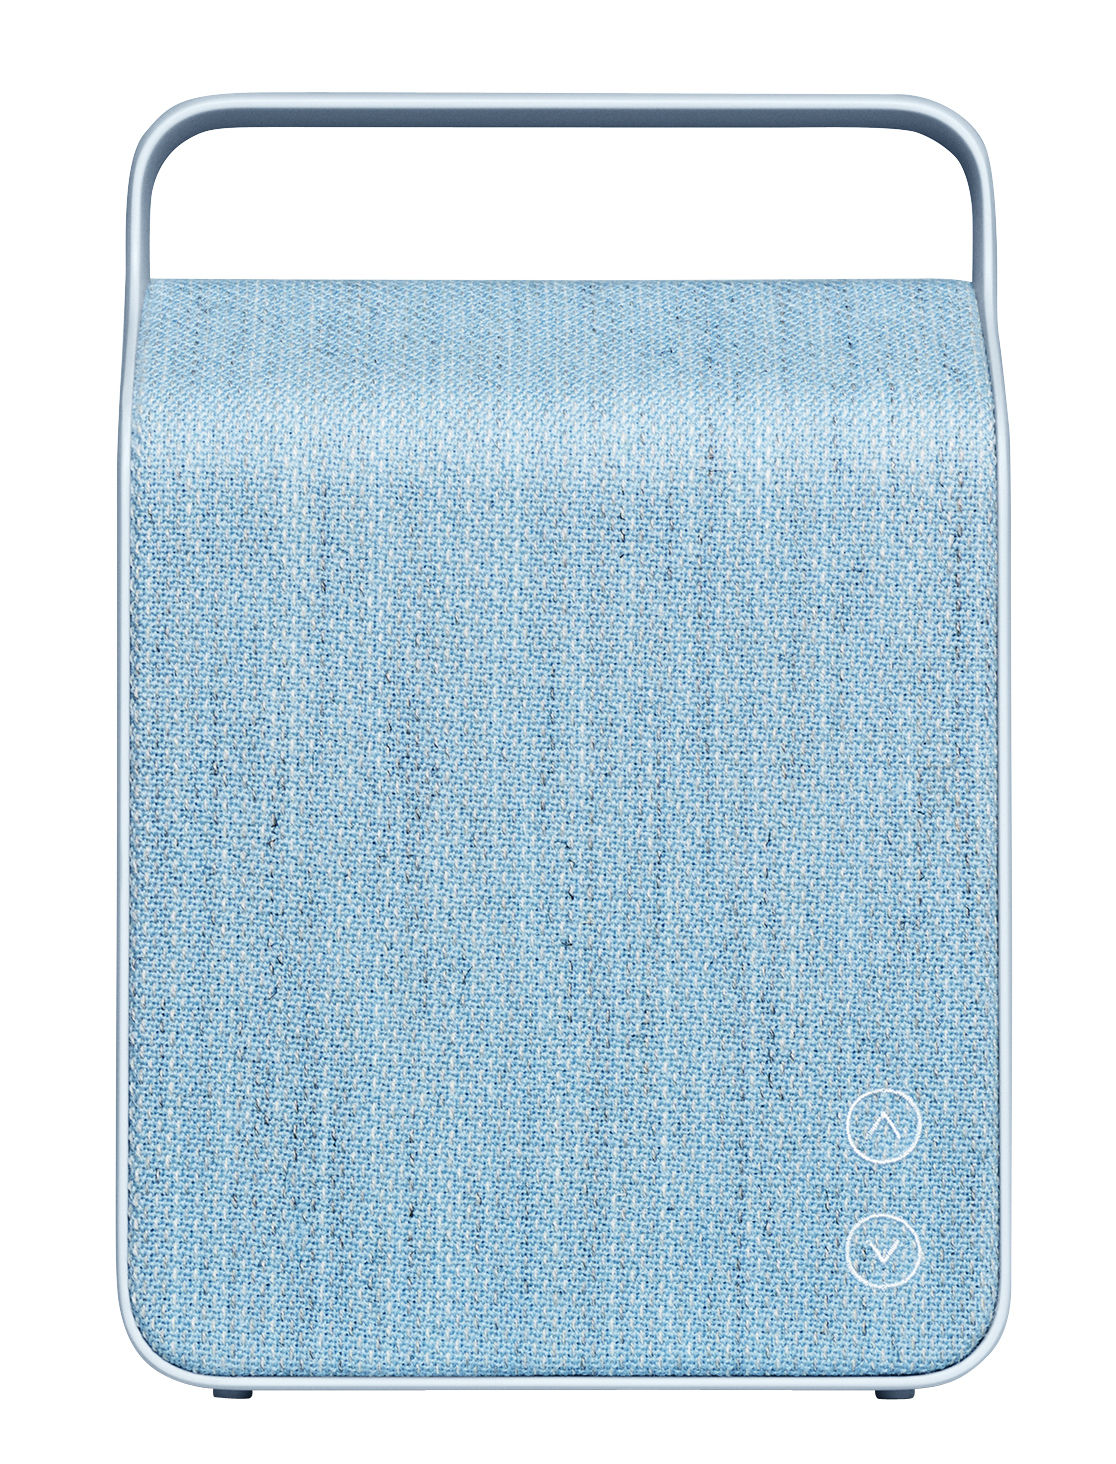 Enceinte Bluetooth Oslo / Sans fil - Tissu - Vifa bleu en tissu